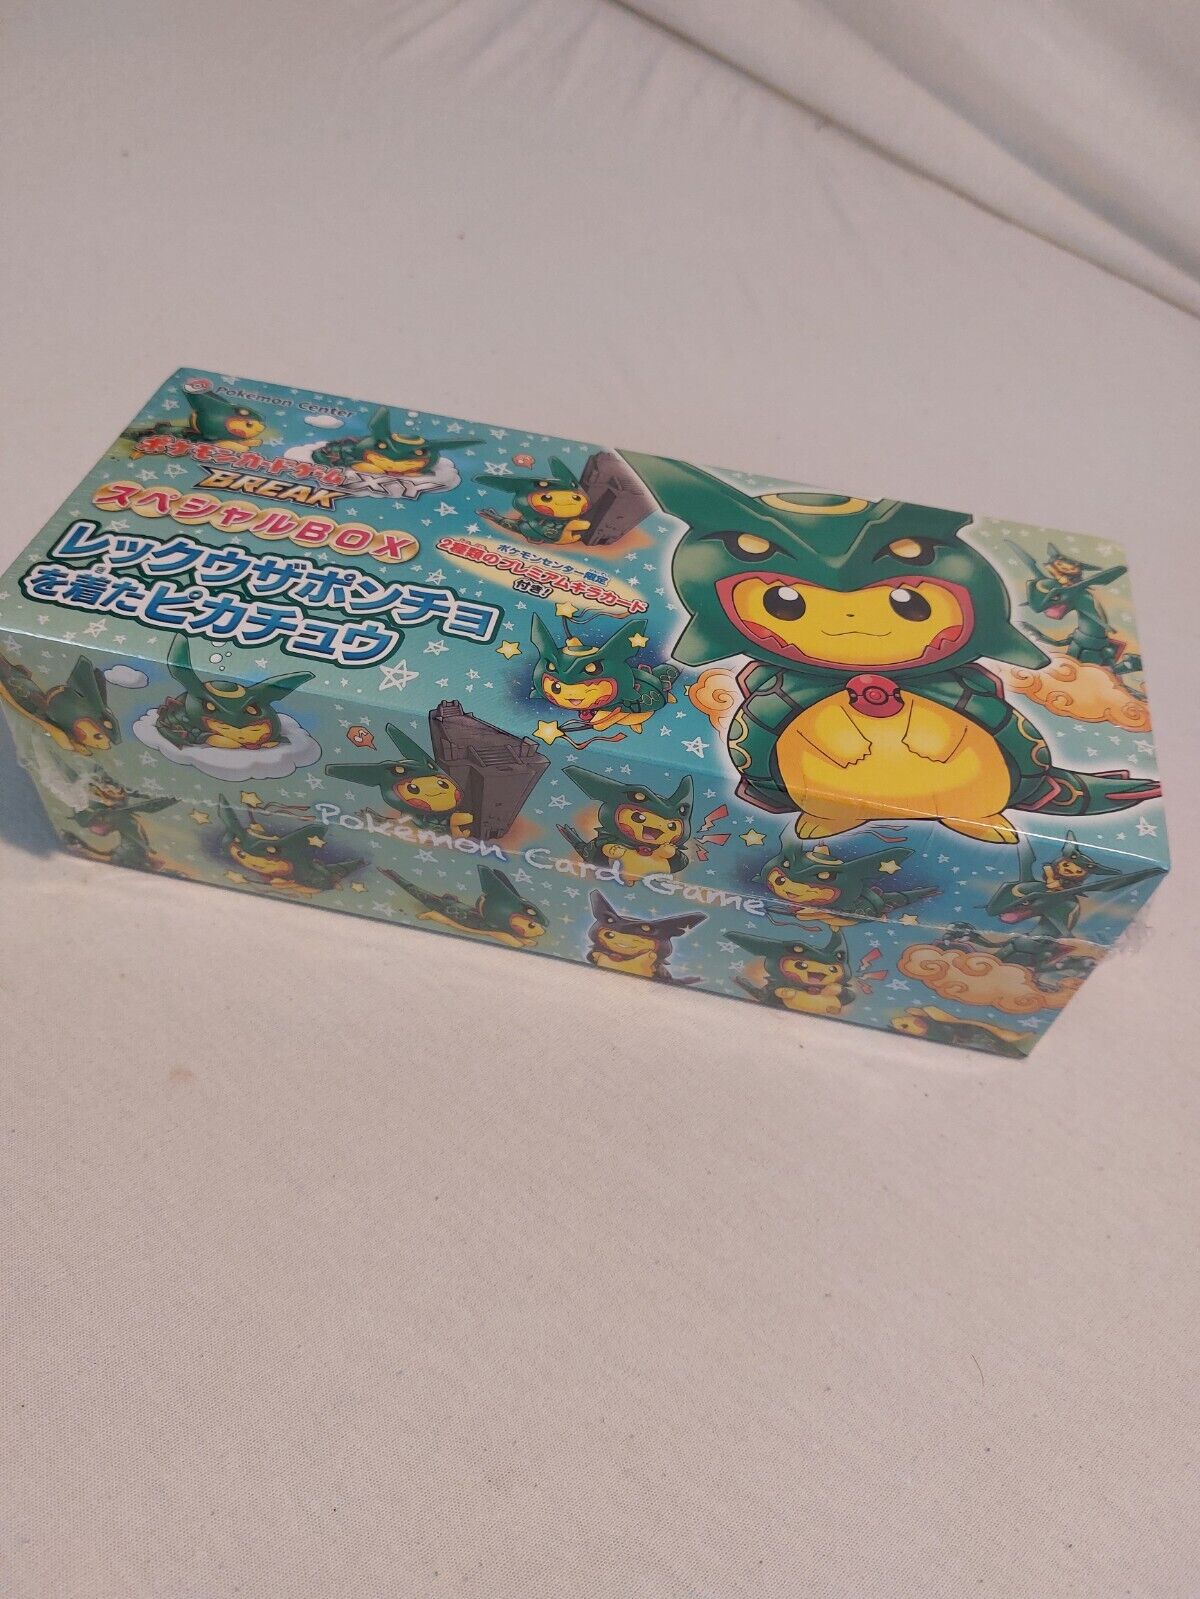 SEALED MINT Pokmon Box Pikachu PonchoCosplay Rayquaza XY Break 2016 JAP